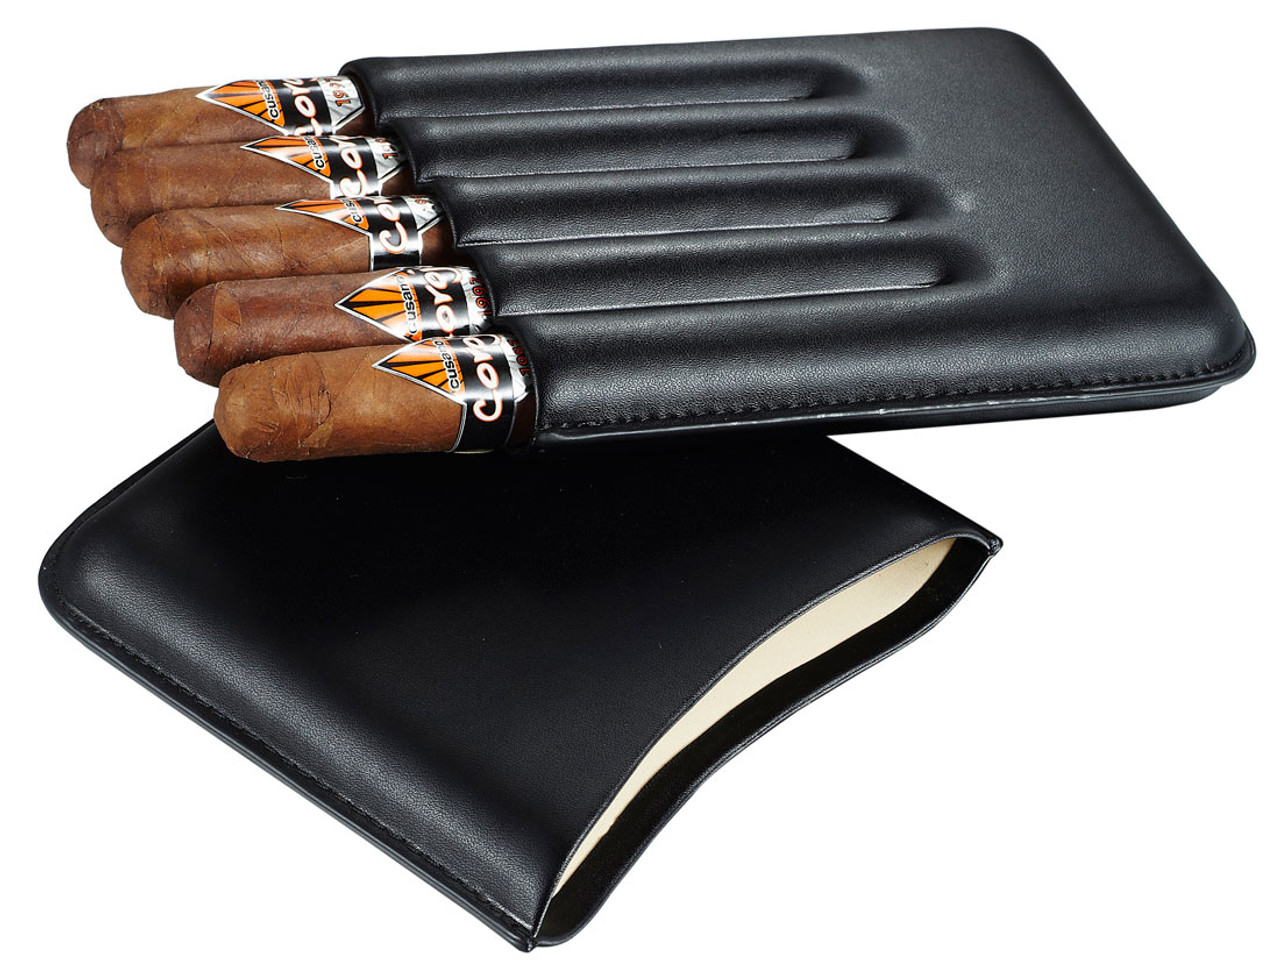 Black Flint Travel Leather Cigar